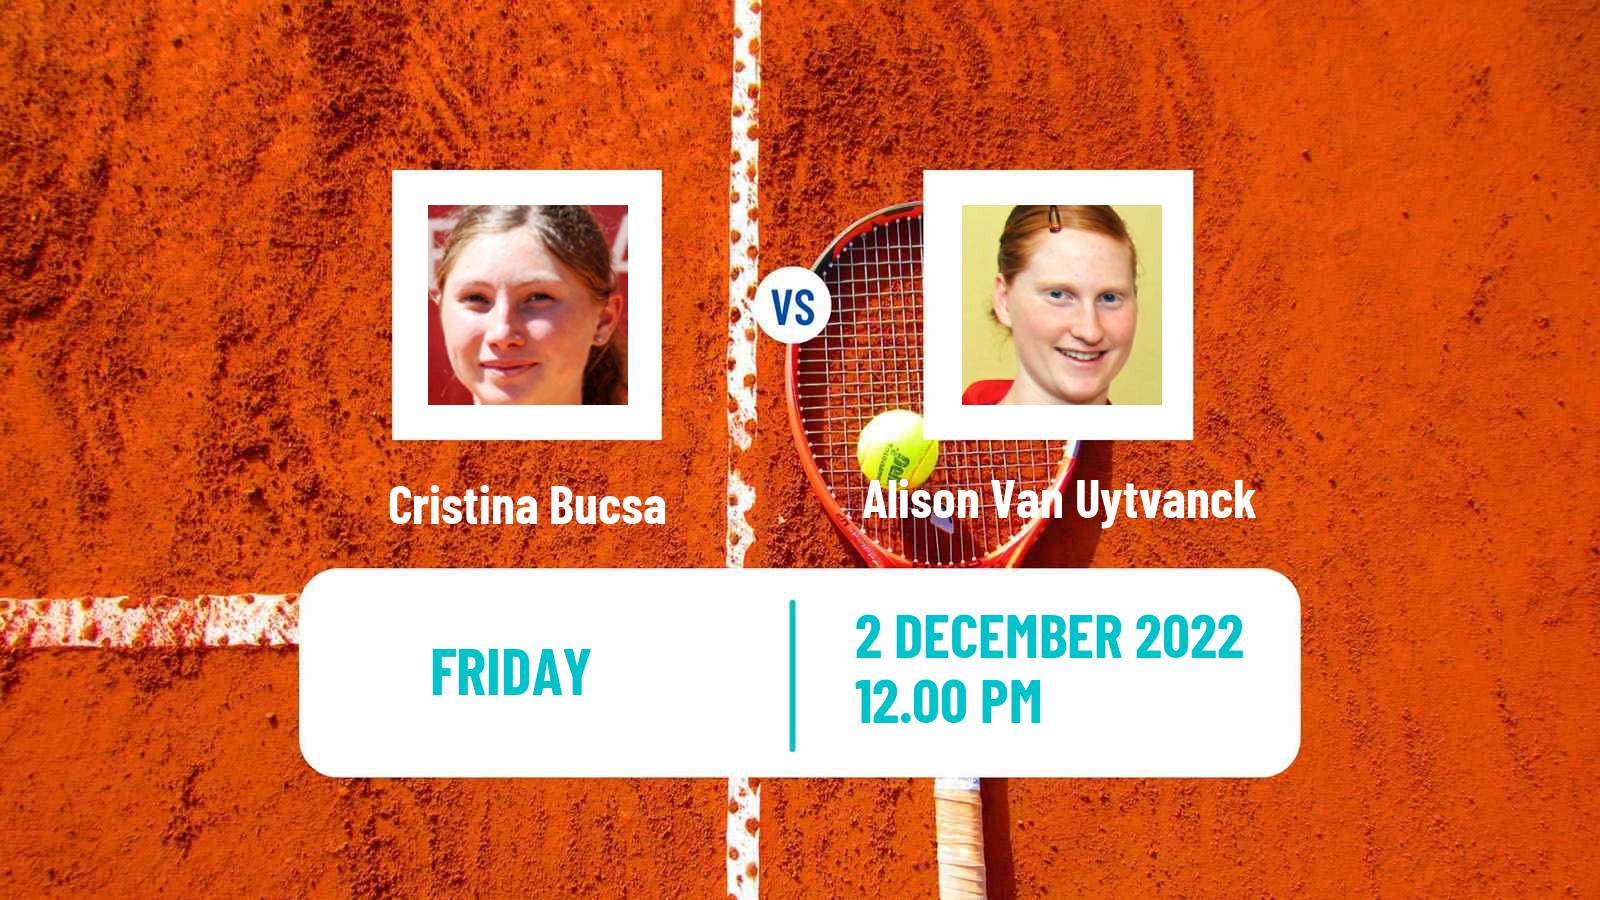 Tennis ATP Challenger Cristina Bucsa - Alison Van Uytvanck